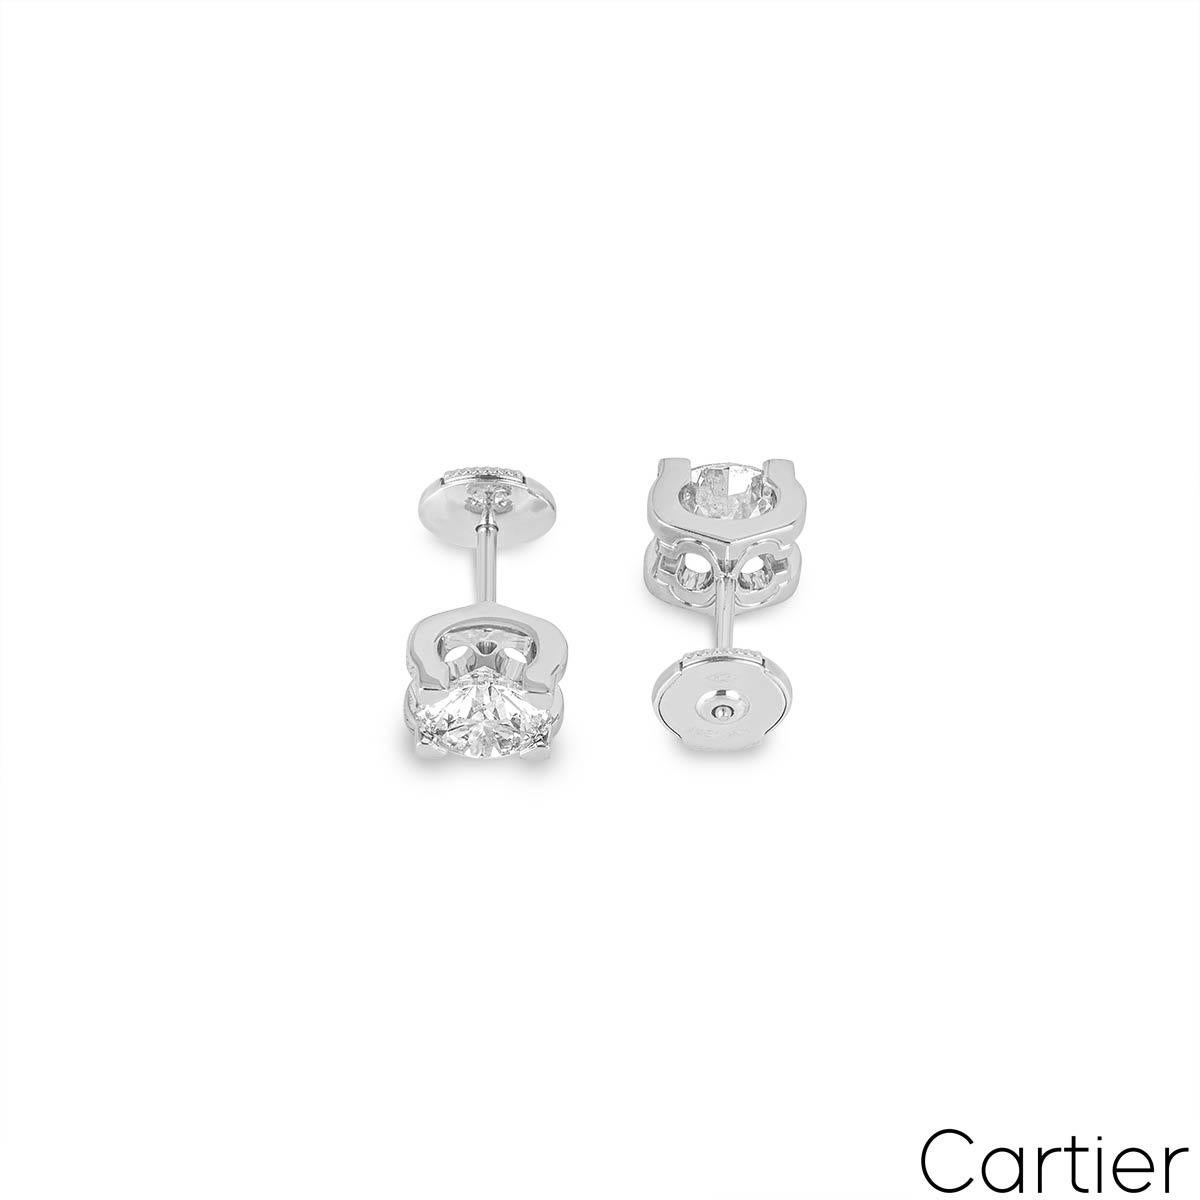 Round Cut Cartier Diamond C de Cartier Stud Earrings 2.42ct G/VVS1 GIA Certified